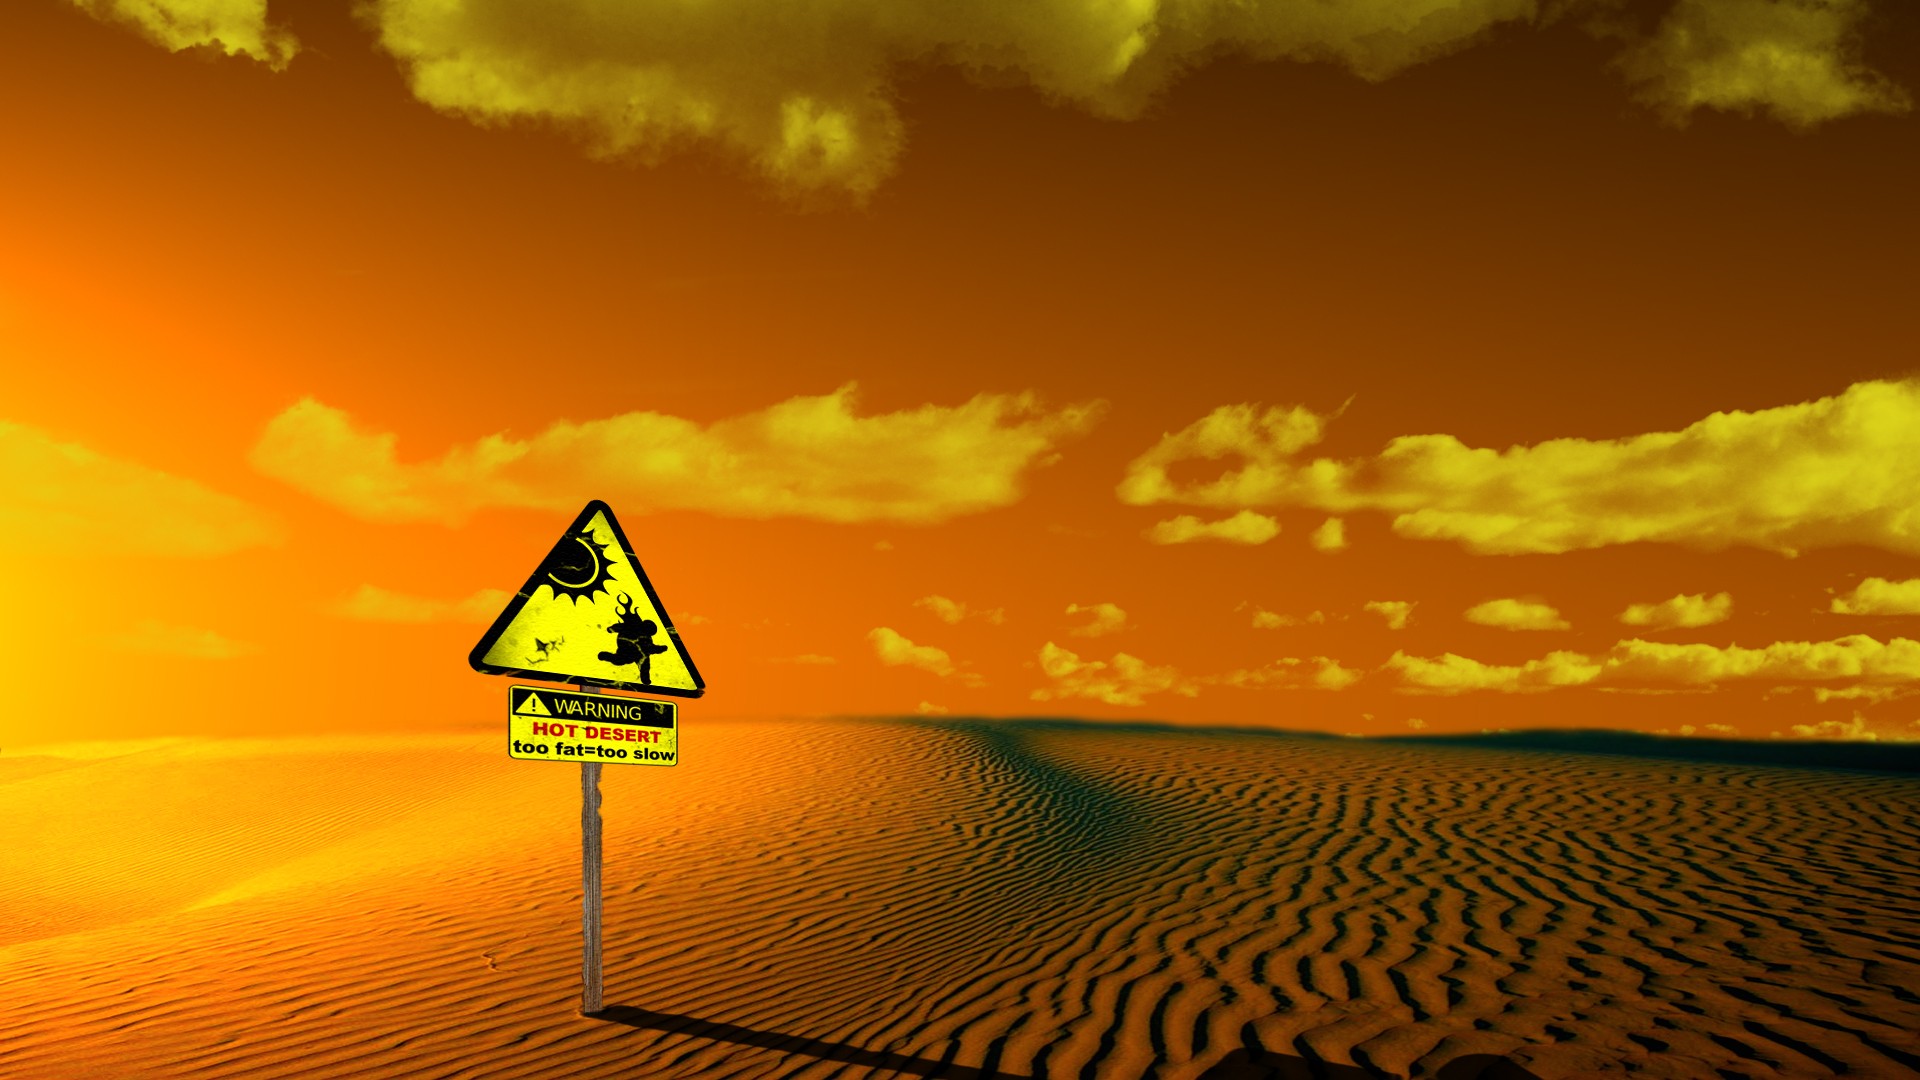 General 1920x1080 desert sun rays digital art sign landscape humor sky orange sky nature